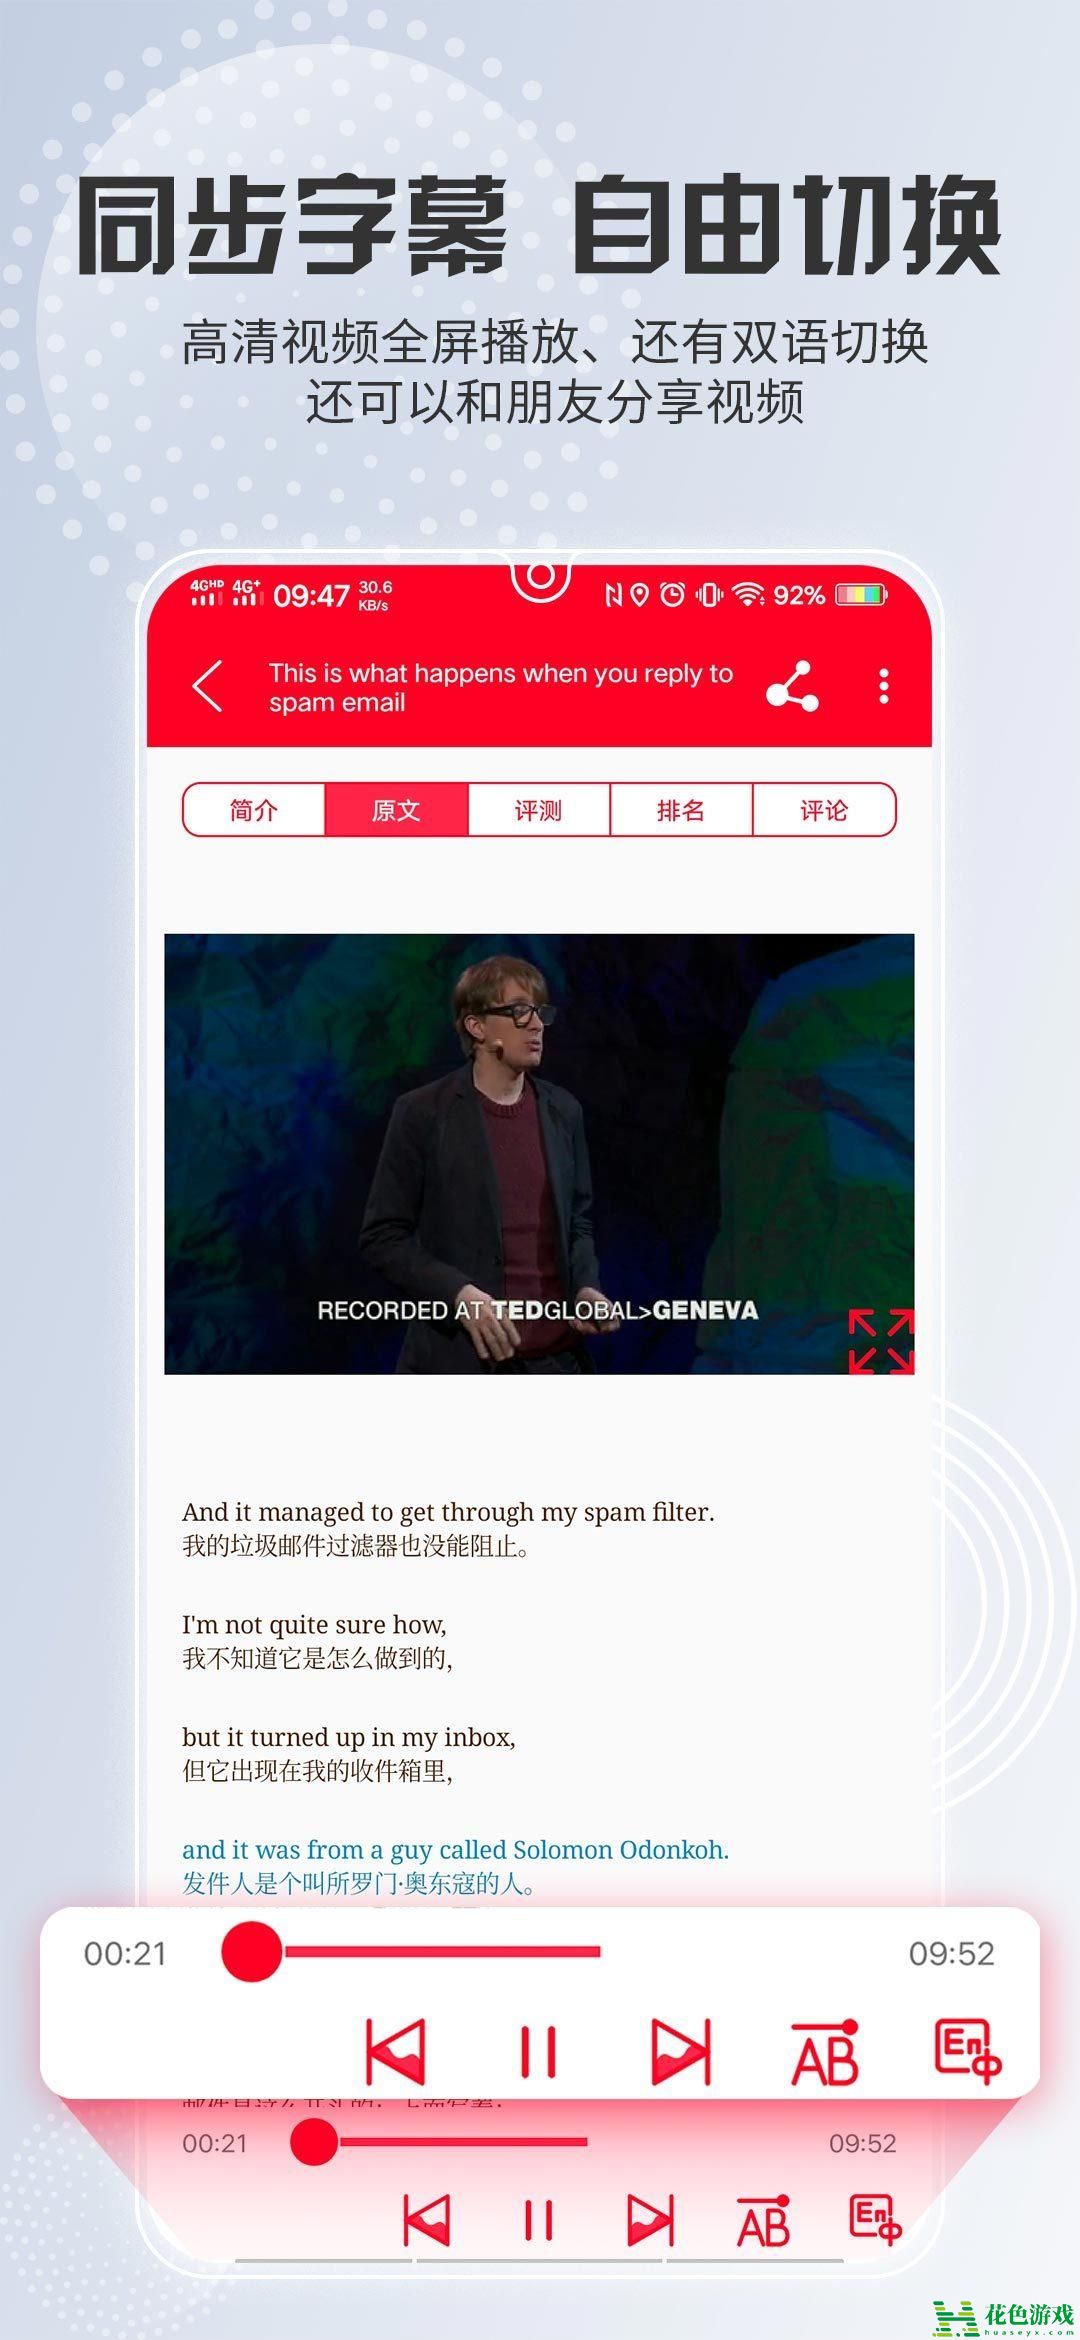 TED视频中英文双字幕